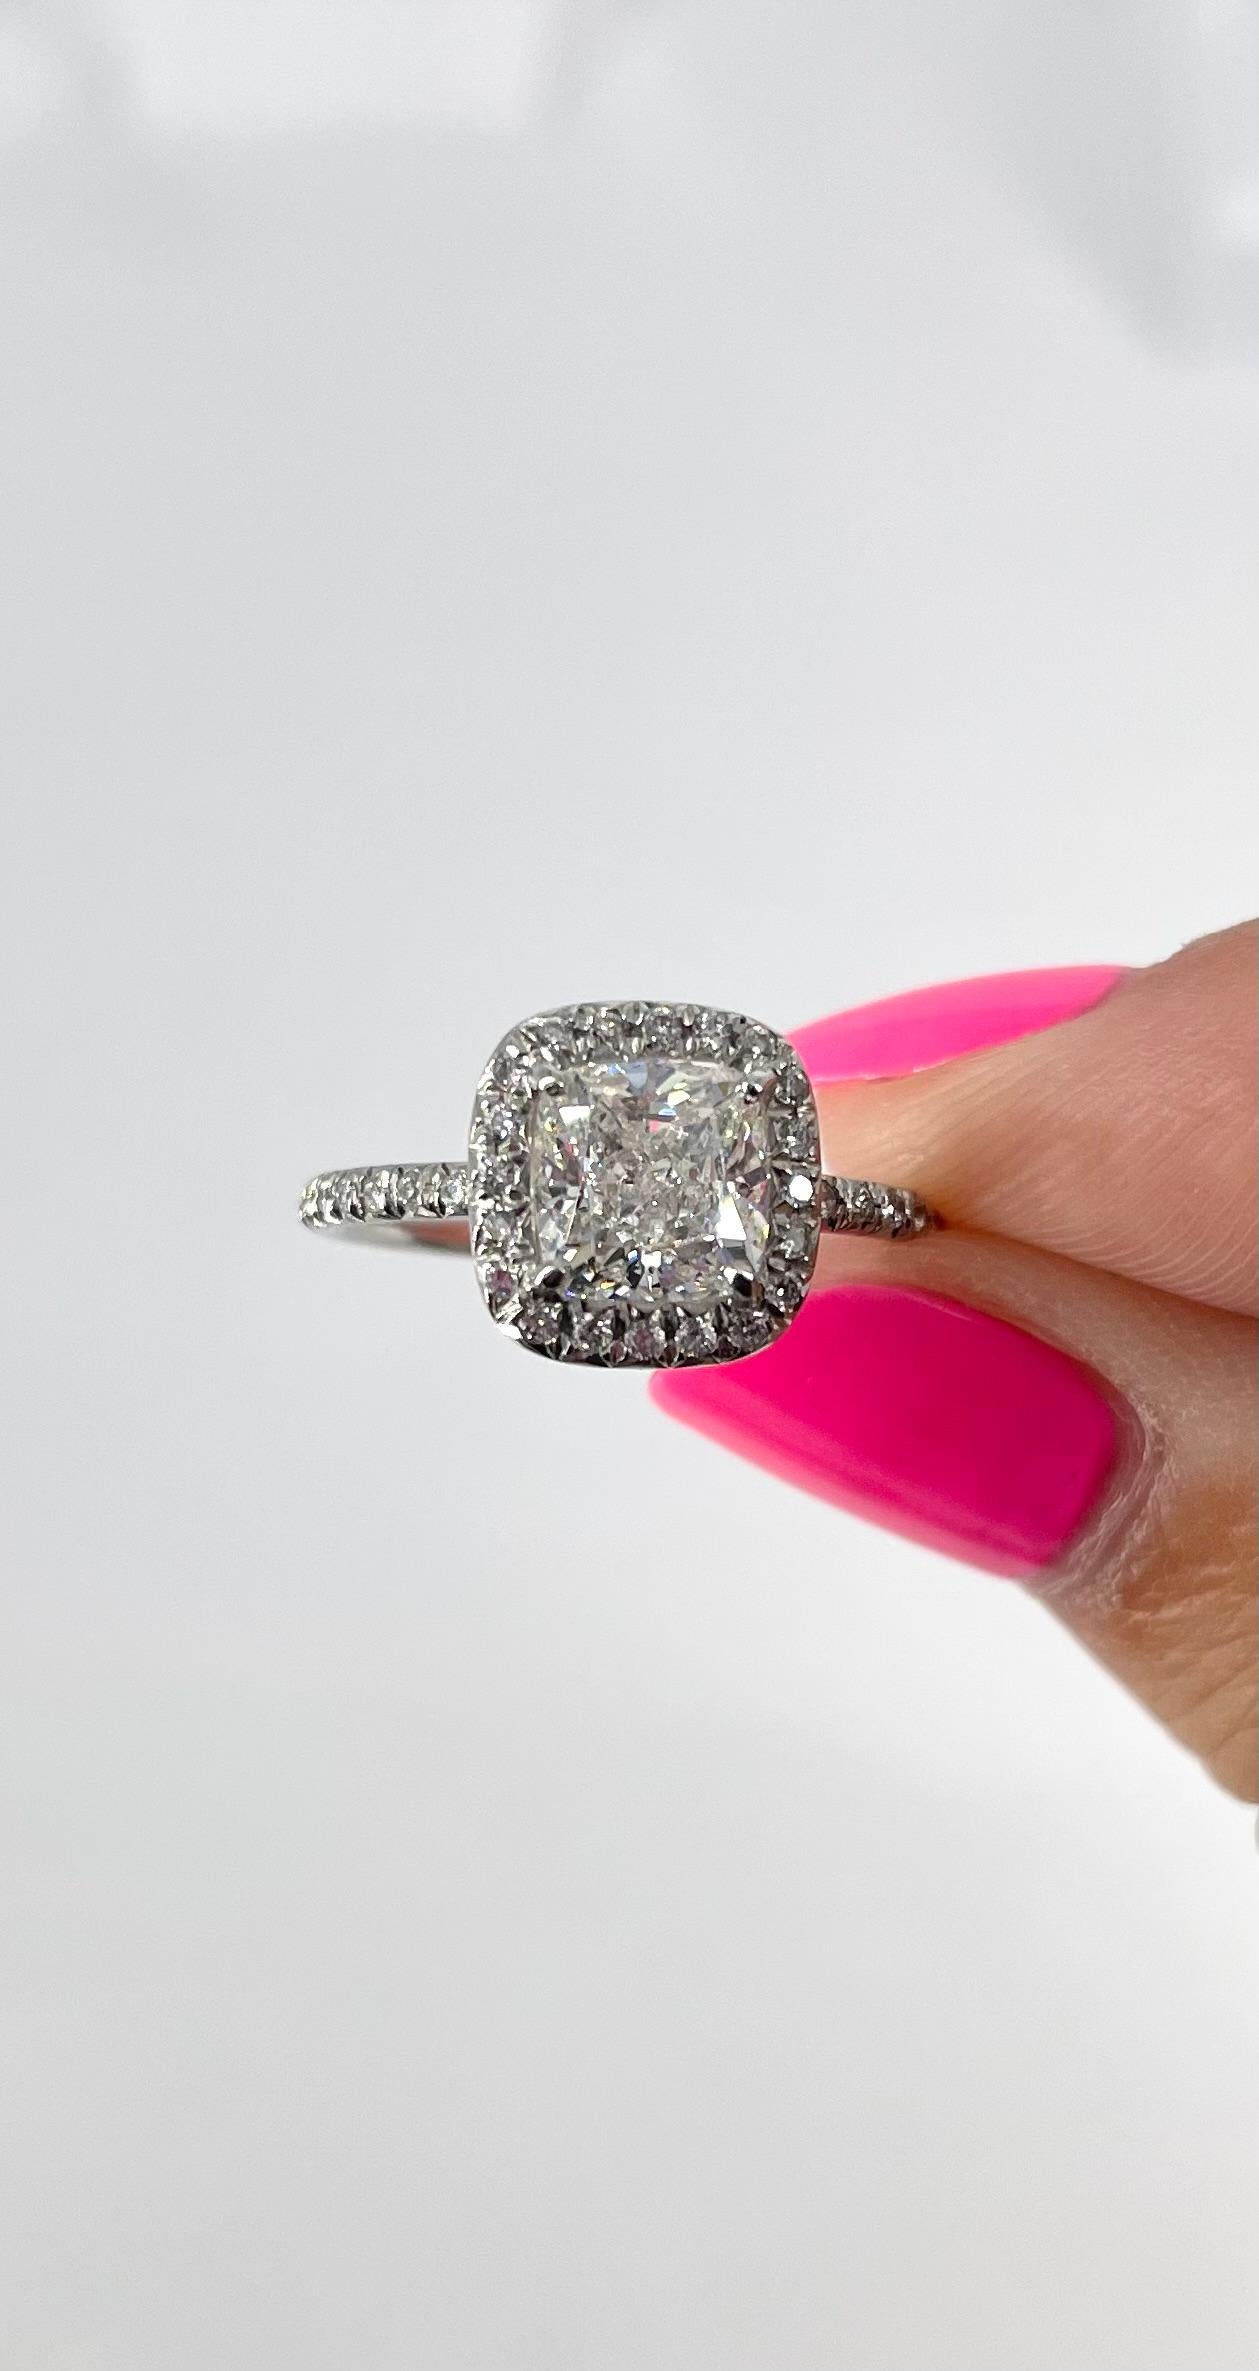 J. Birnbach 1.51 carat Cushion Cut Diamond Halo Engagement Ring in Platinum For Sale 1